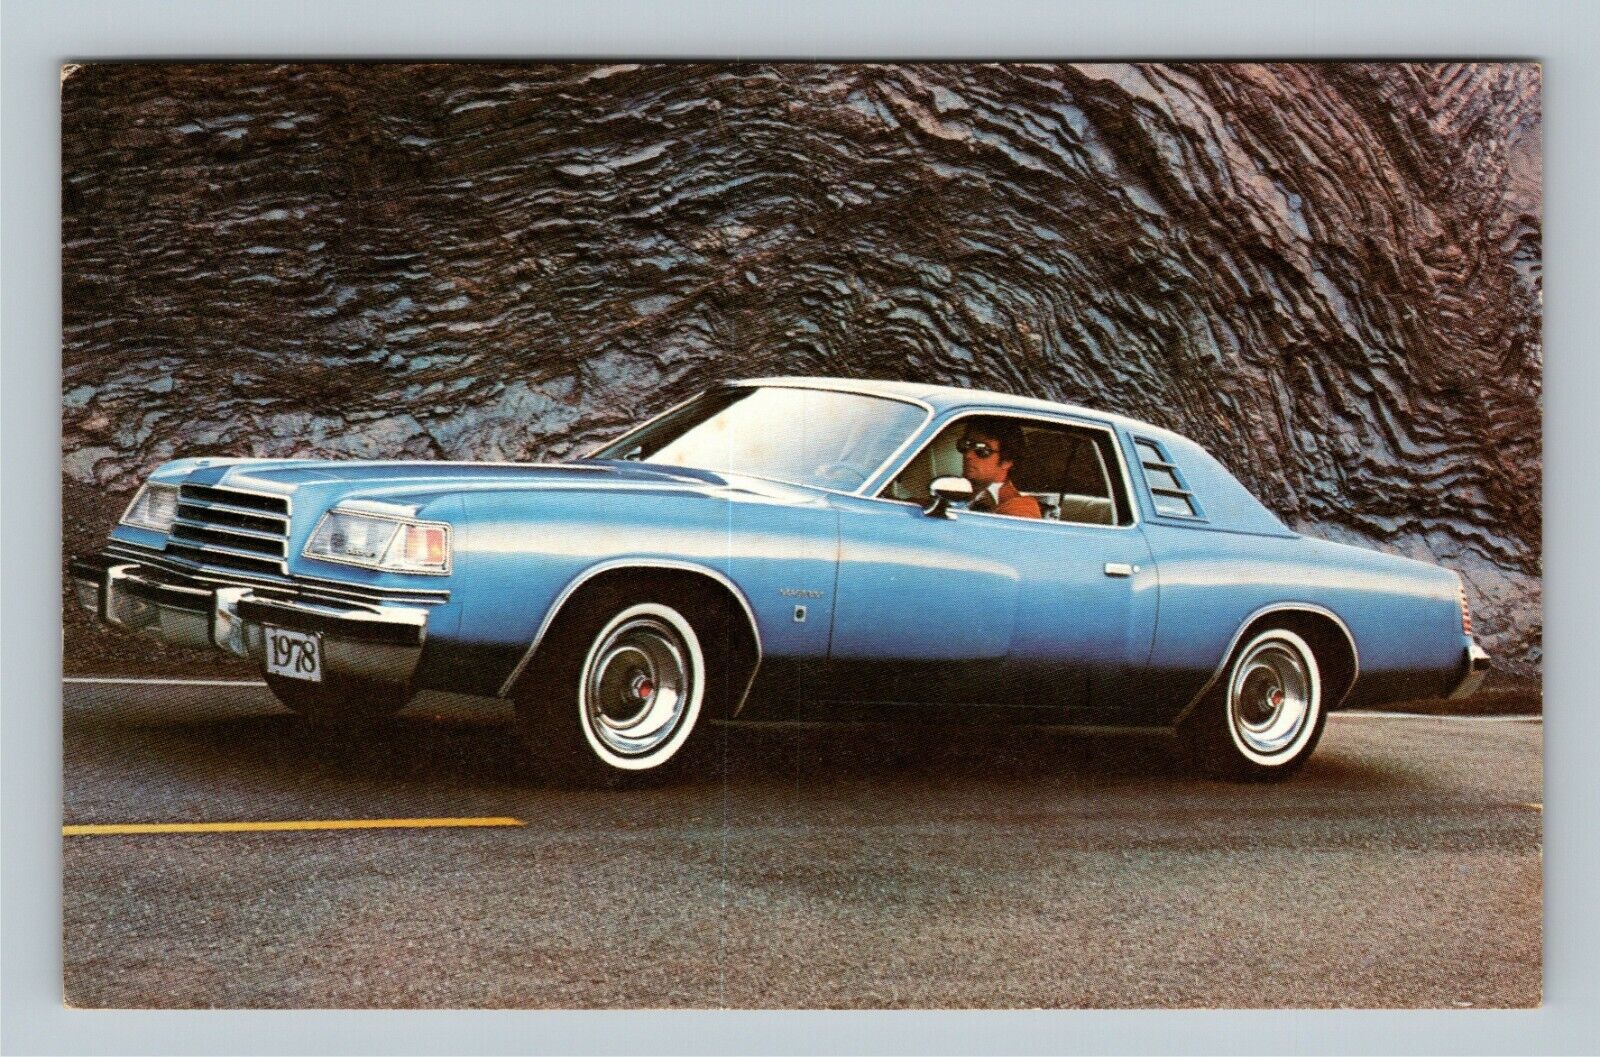 Automobile-1978 Dodge Magnum XE, 2-Door, Luxury Car, Blue Vintage Postcard